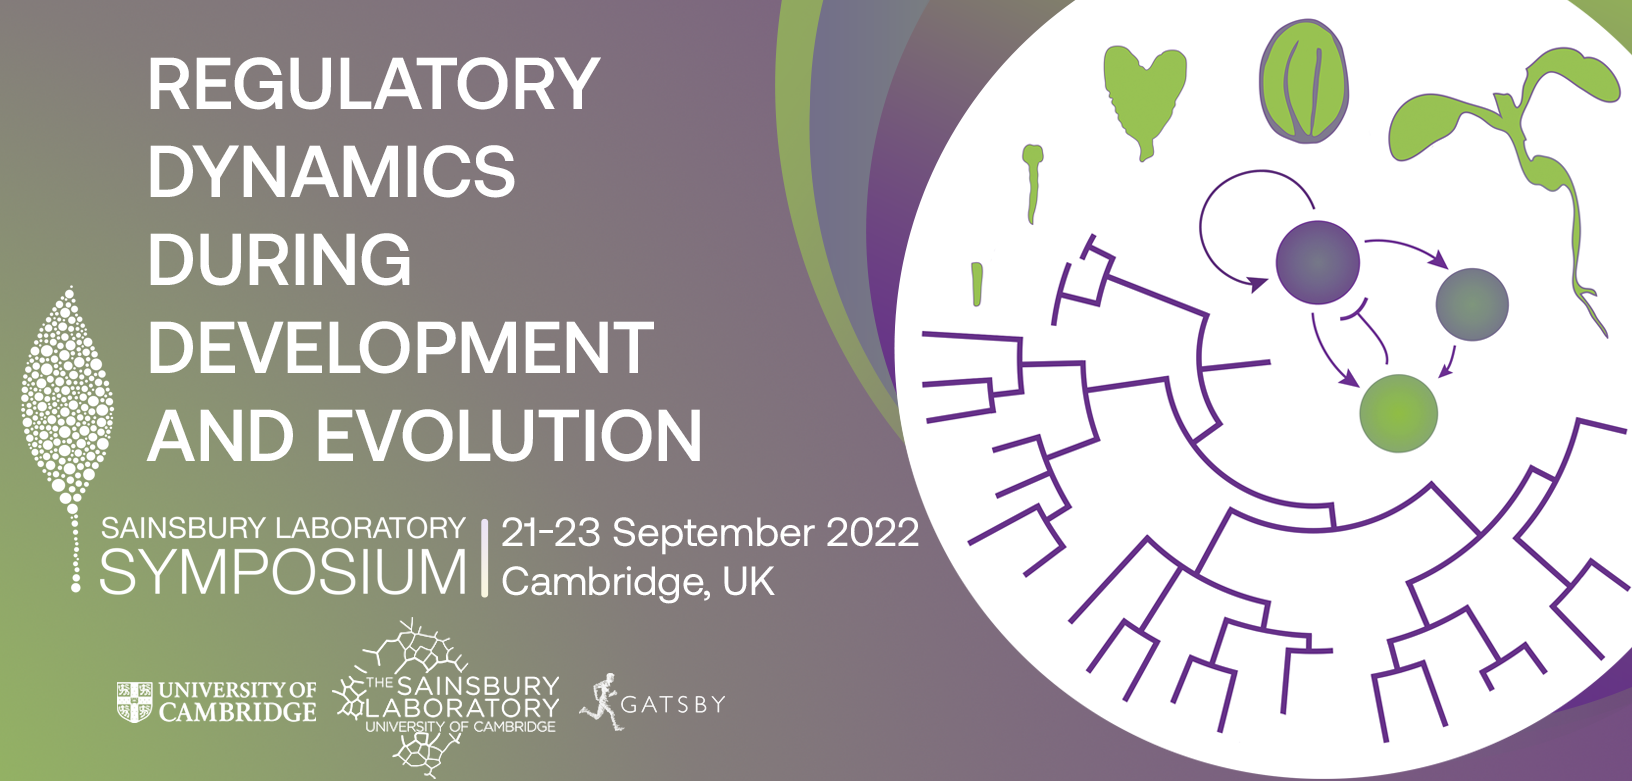 Sainsbury Laboratory Symposium promotional banner. Text: Sainsbury Laboratory Symposium, 21-23 September 2022, Cambridge UK. Theme: Regulatory dynamics during development and evolution.